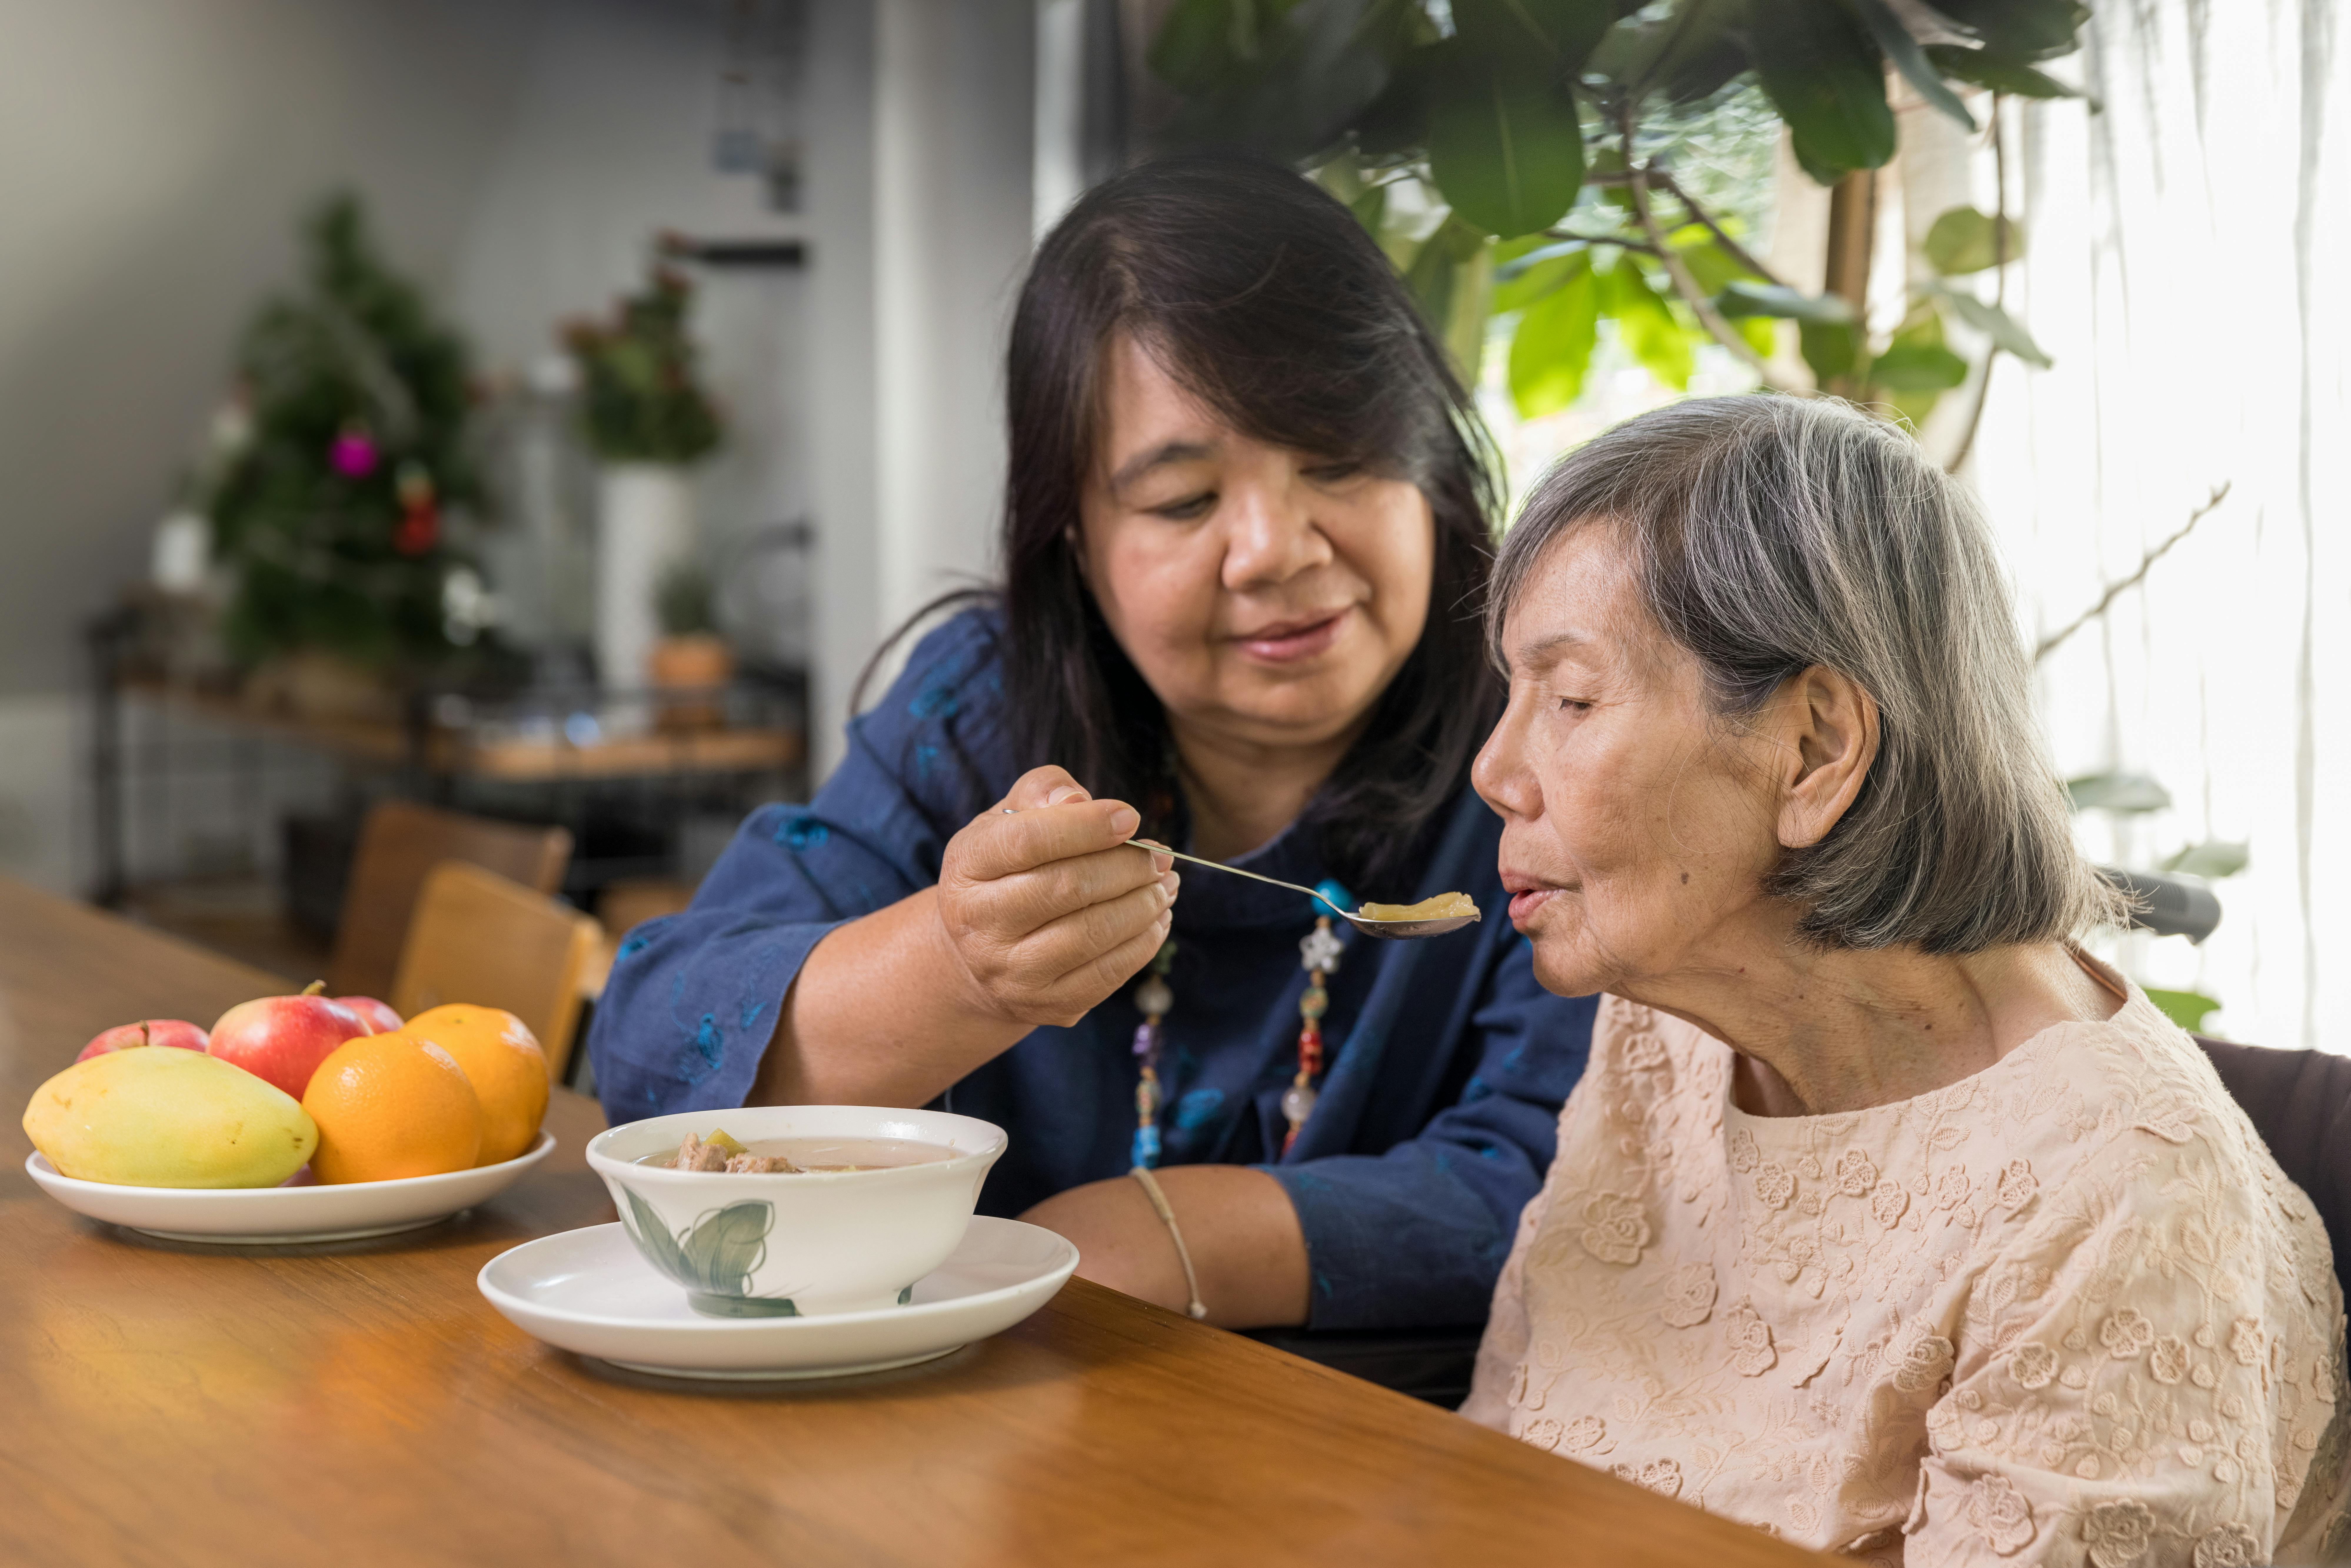 A caregiver feeds her patient soup